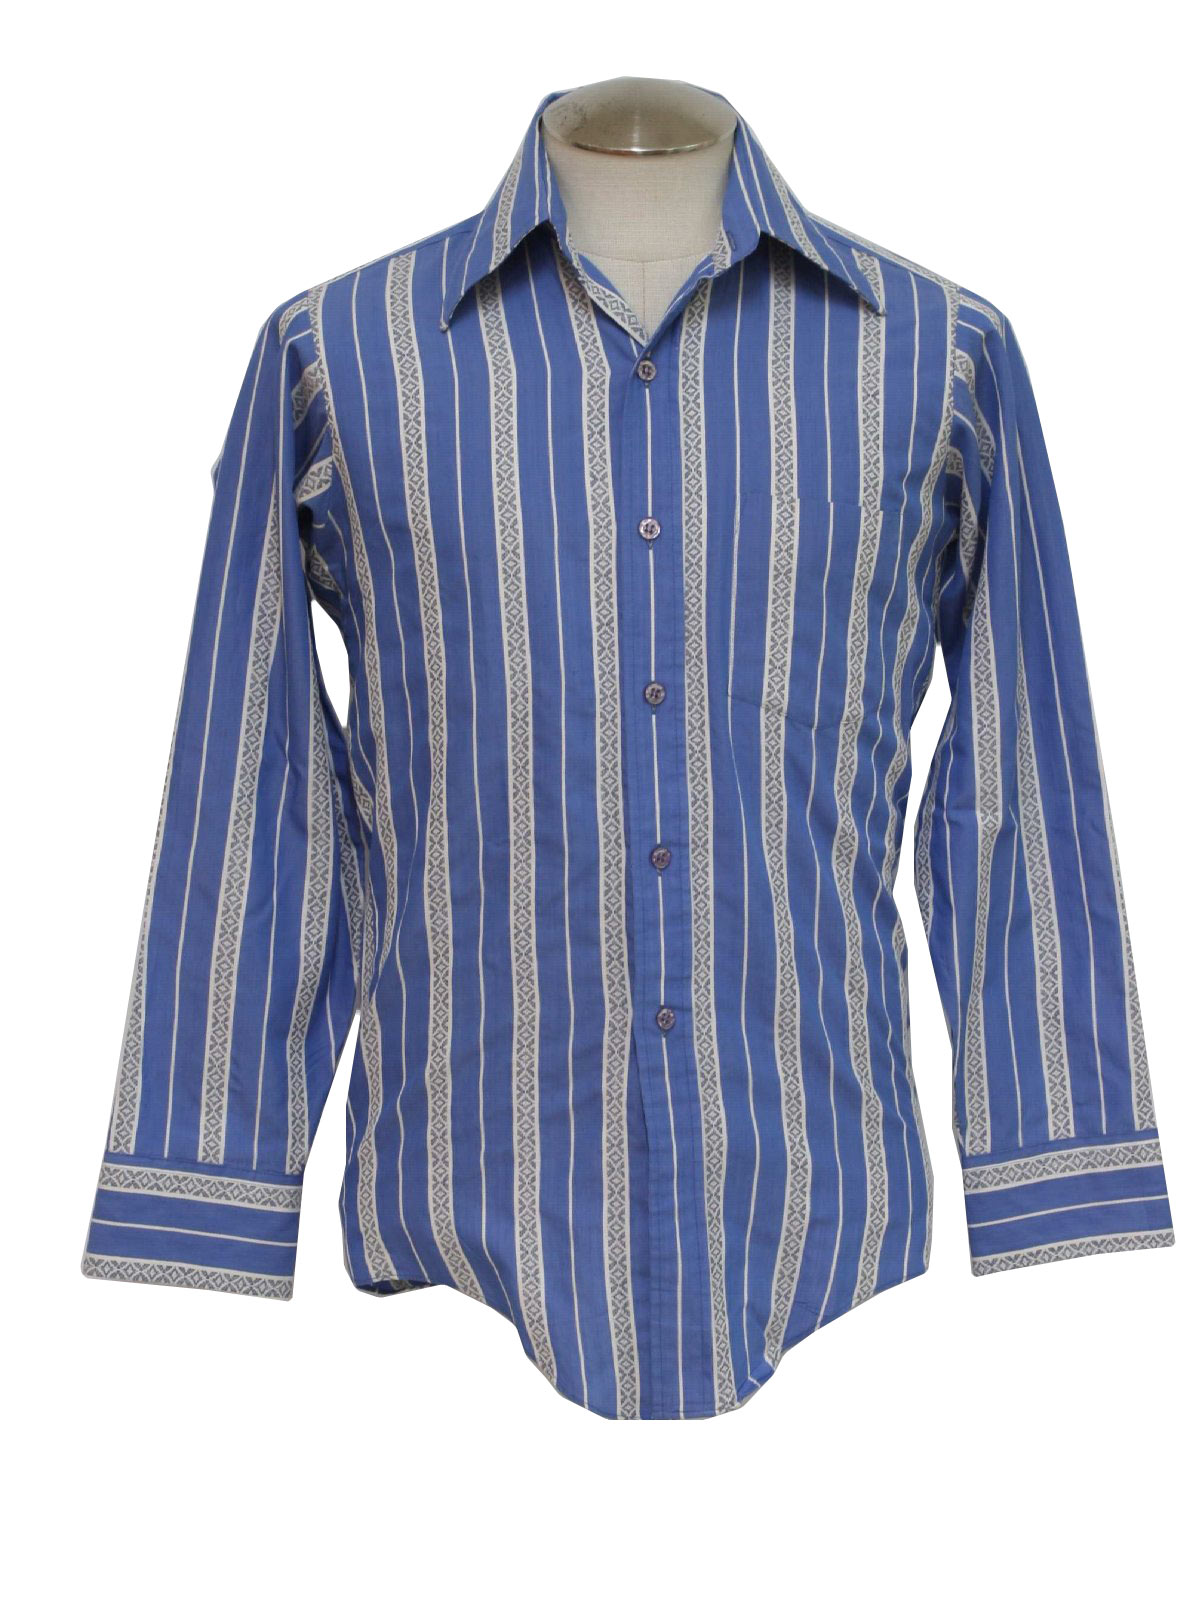 Retro 1960's Shirt (Alexanders Sanforized) : Late 60s -Alexanders ...